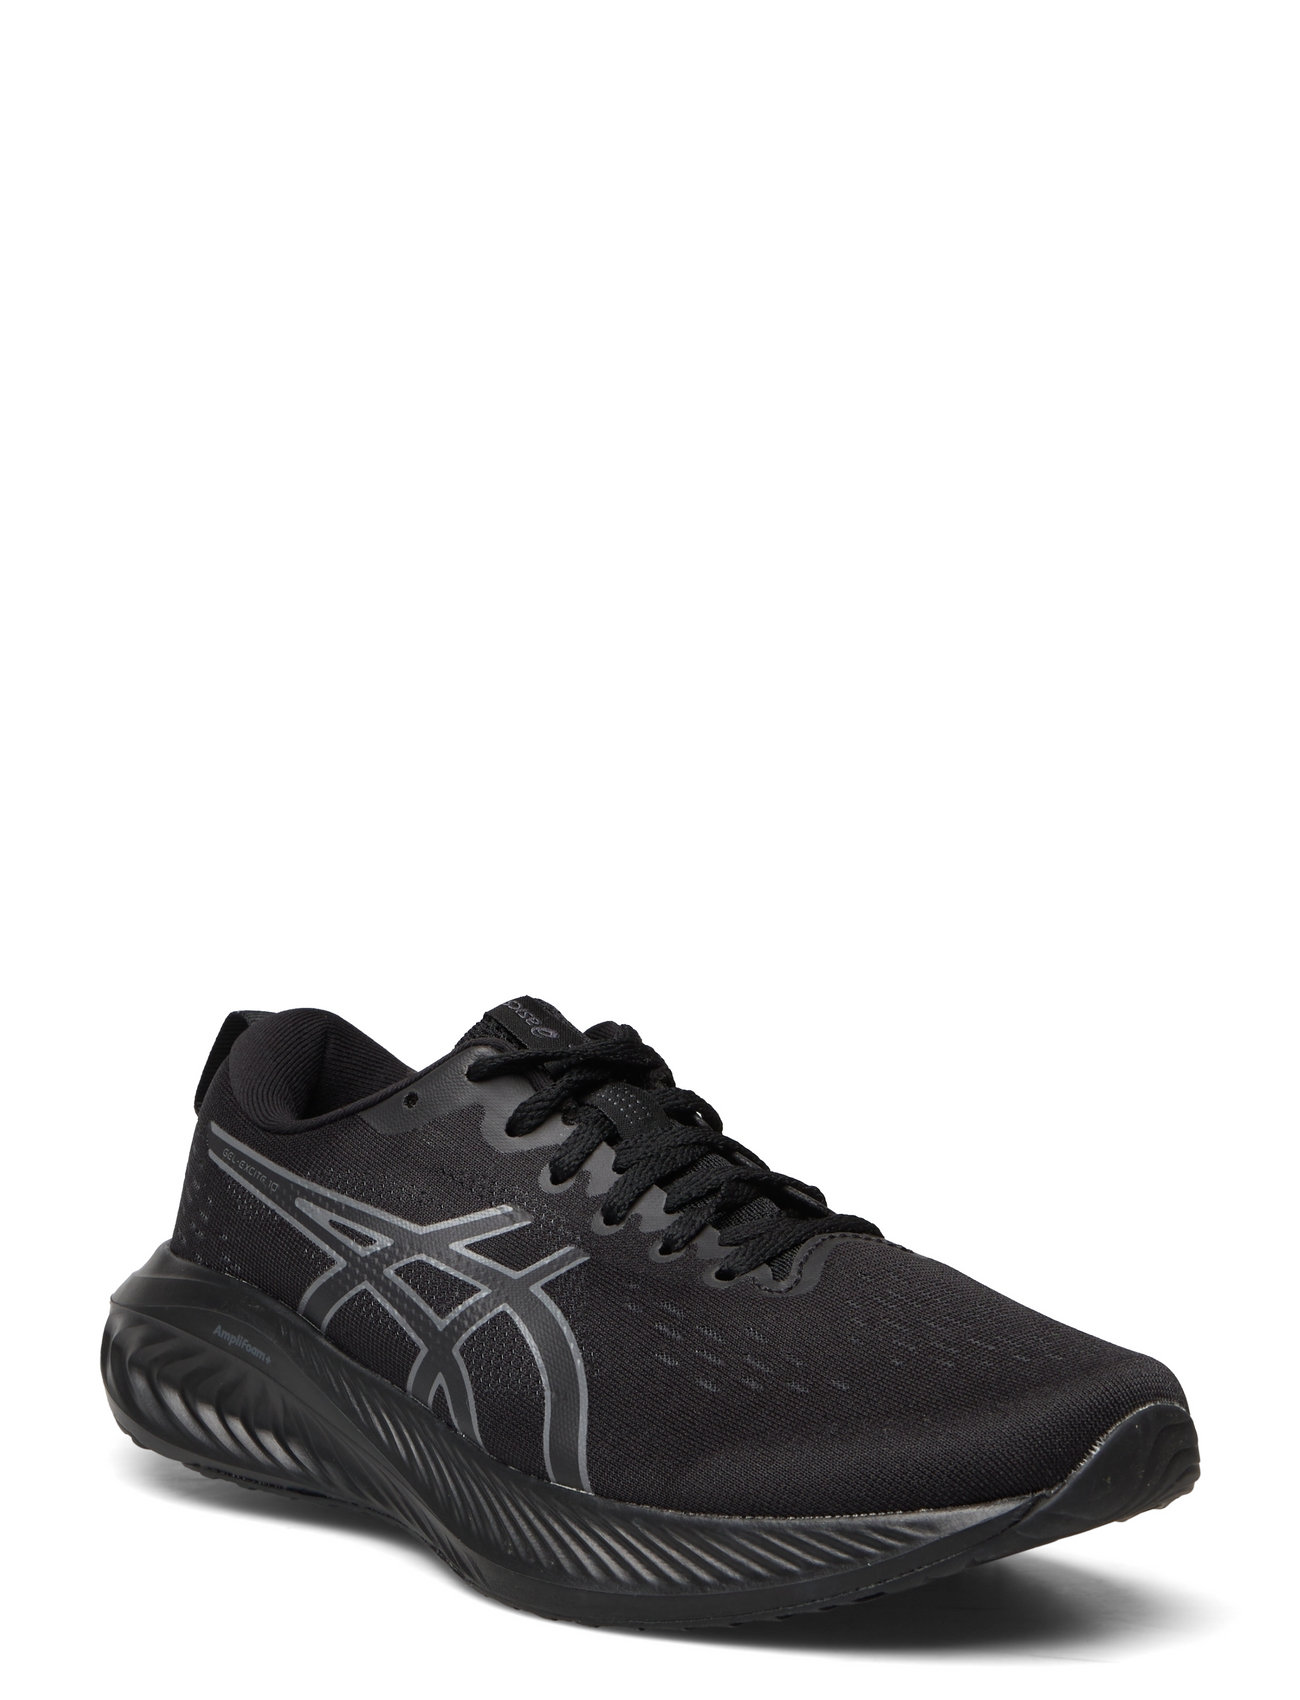 Gel-Excite 10 Sport Sport Shoes Running Shoes Black Asics